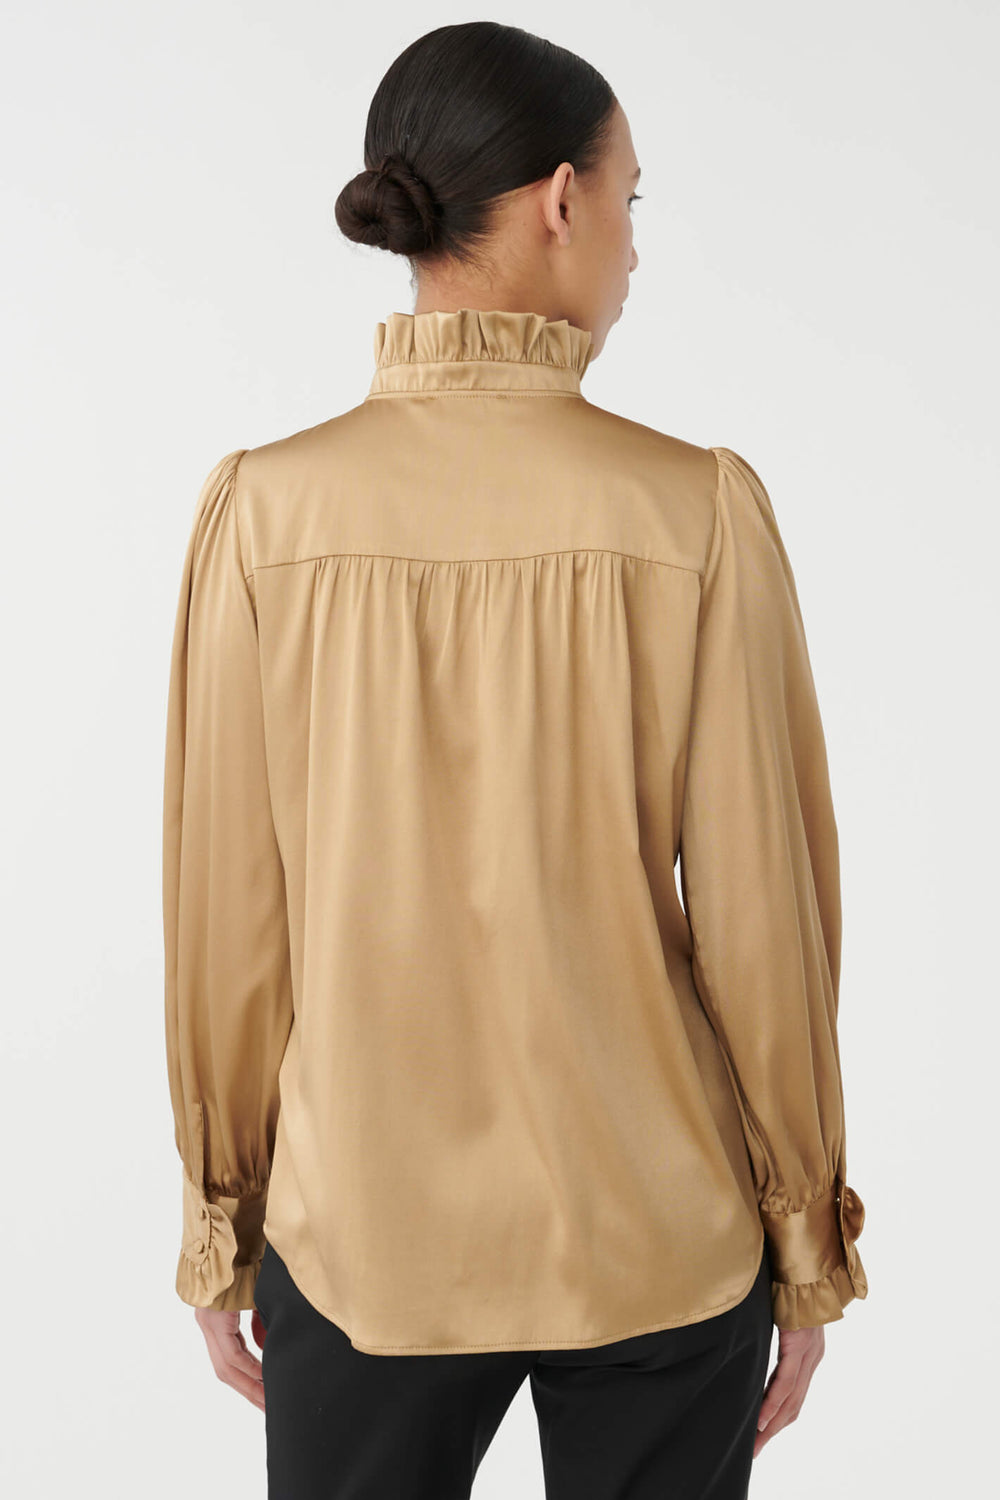 Dea Kudibal Merle 1101023 Zest Gold Silk Ruffle Blouse - Olivia Grace Fashion